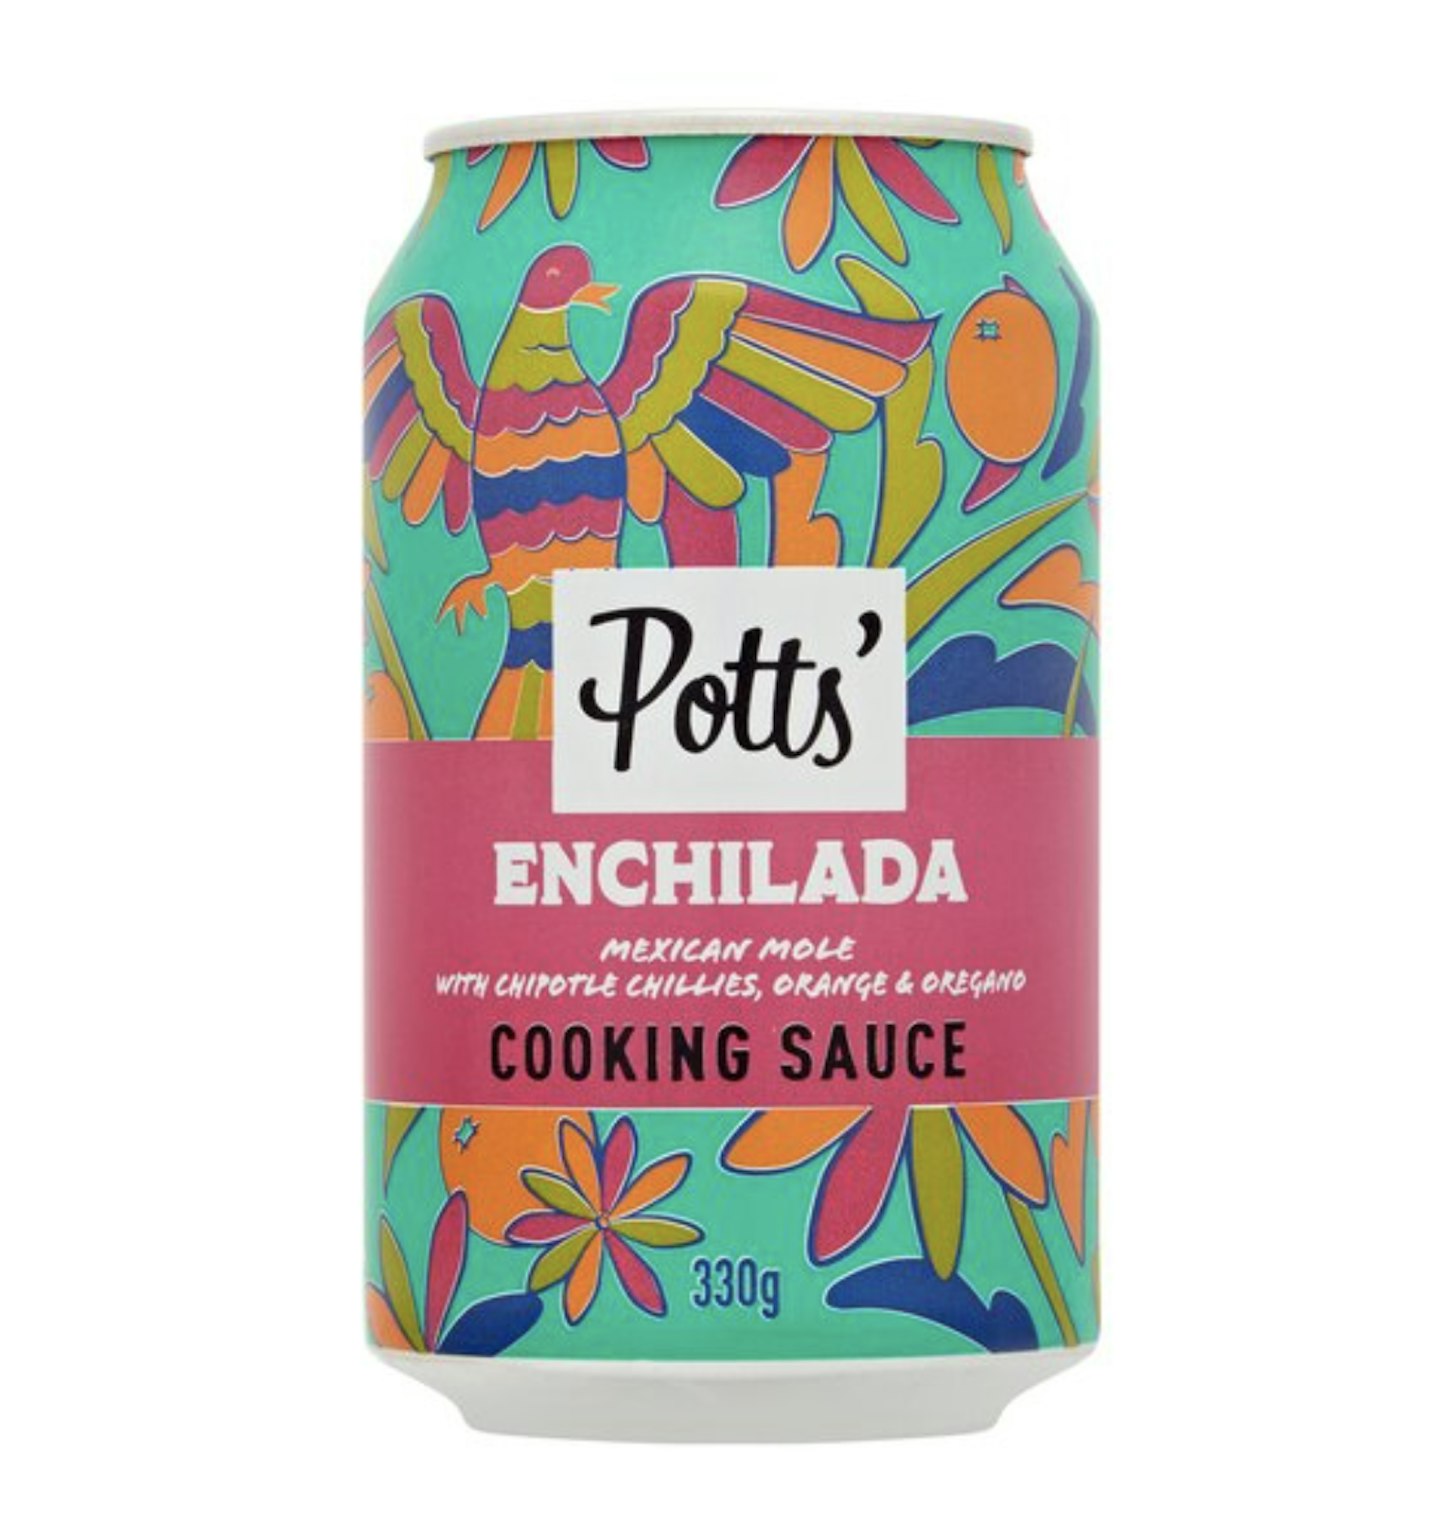 Potts Enchilada Cooking Sauce